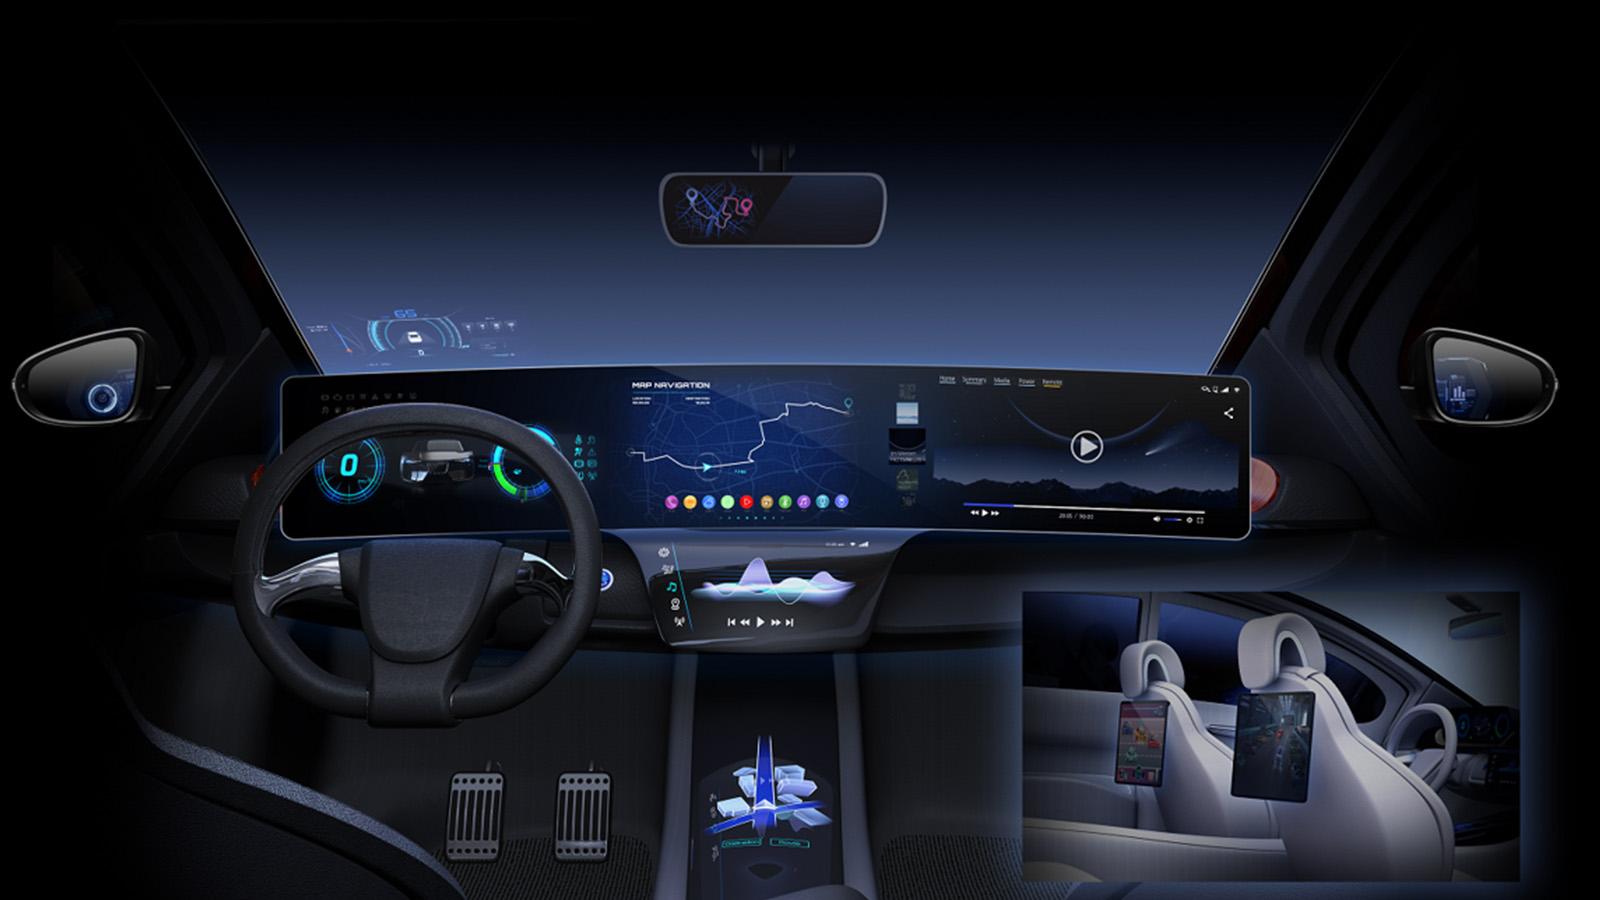 MediaTek e Nvidia fecham parceria para oferta de IA automotiva